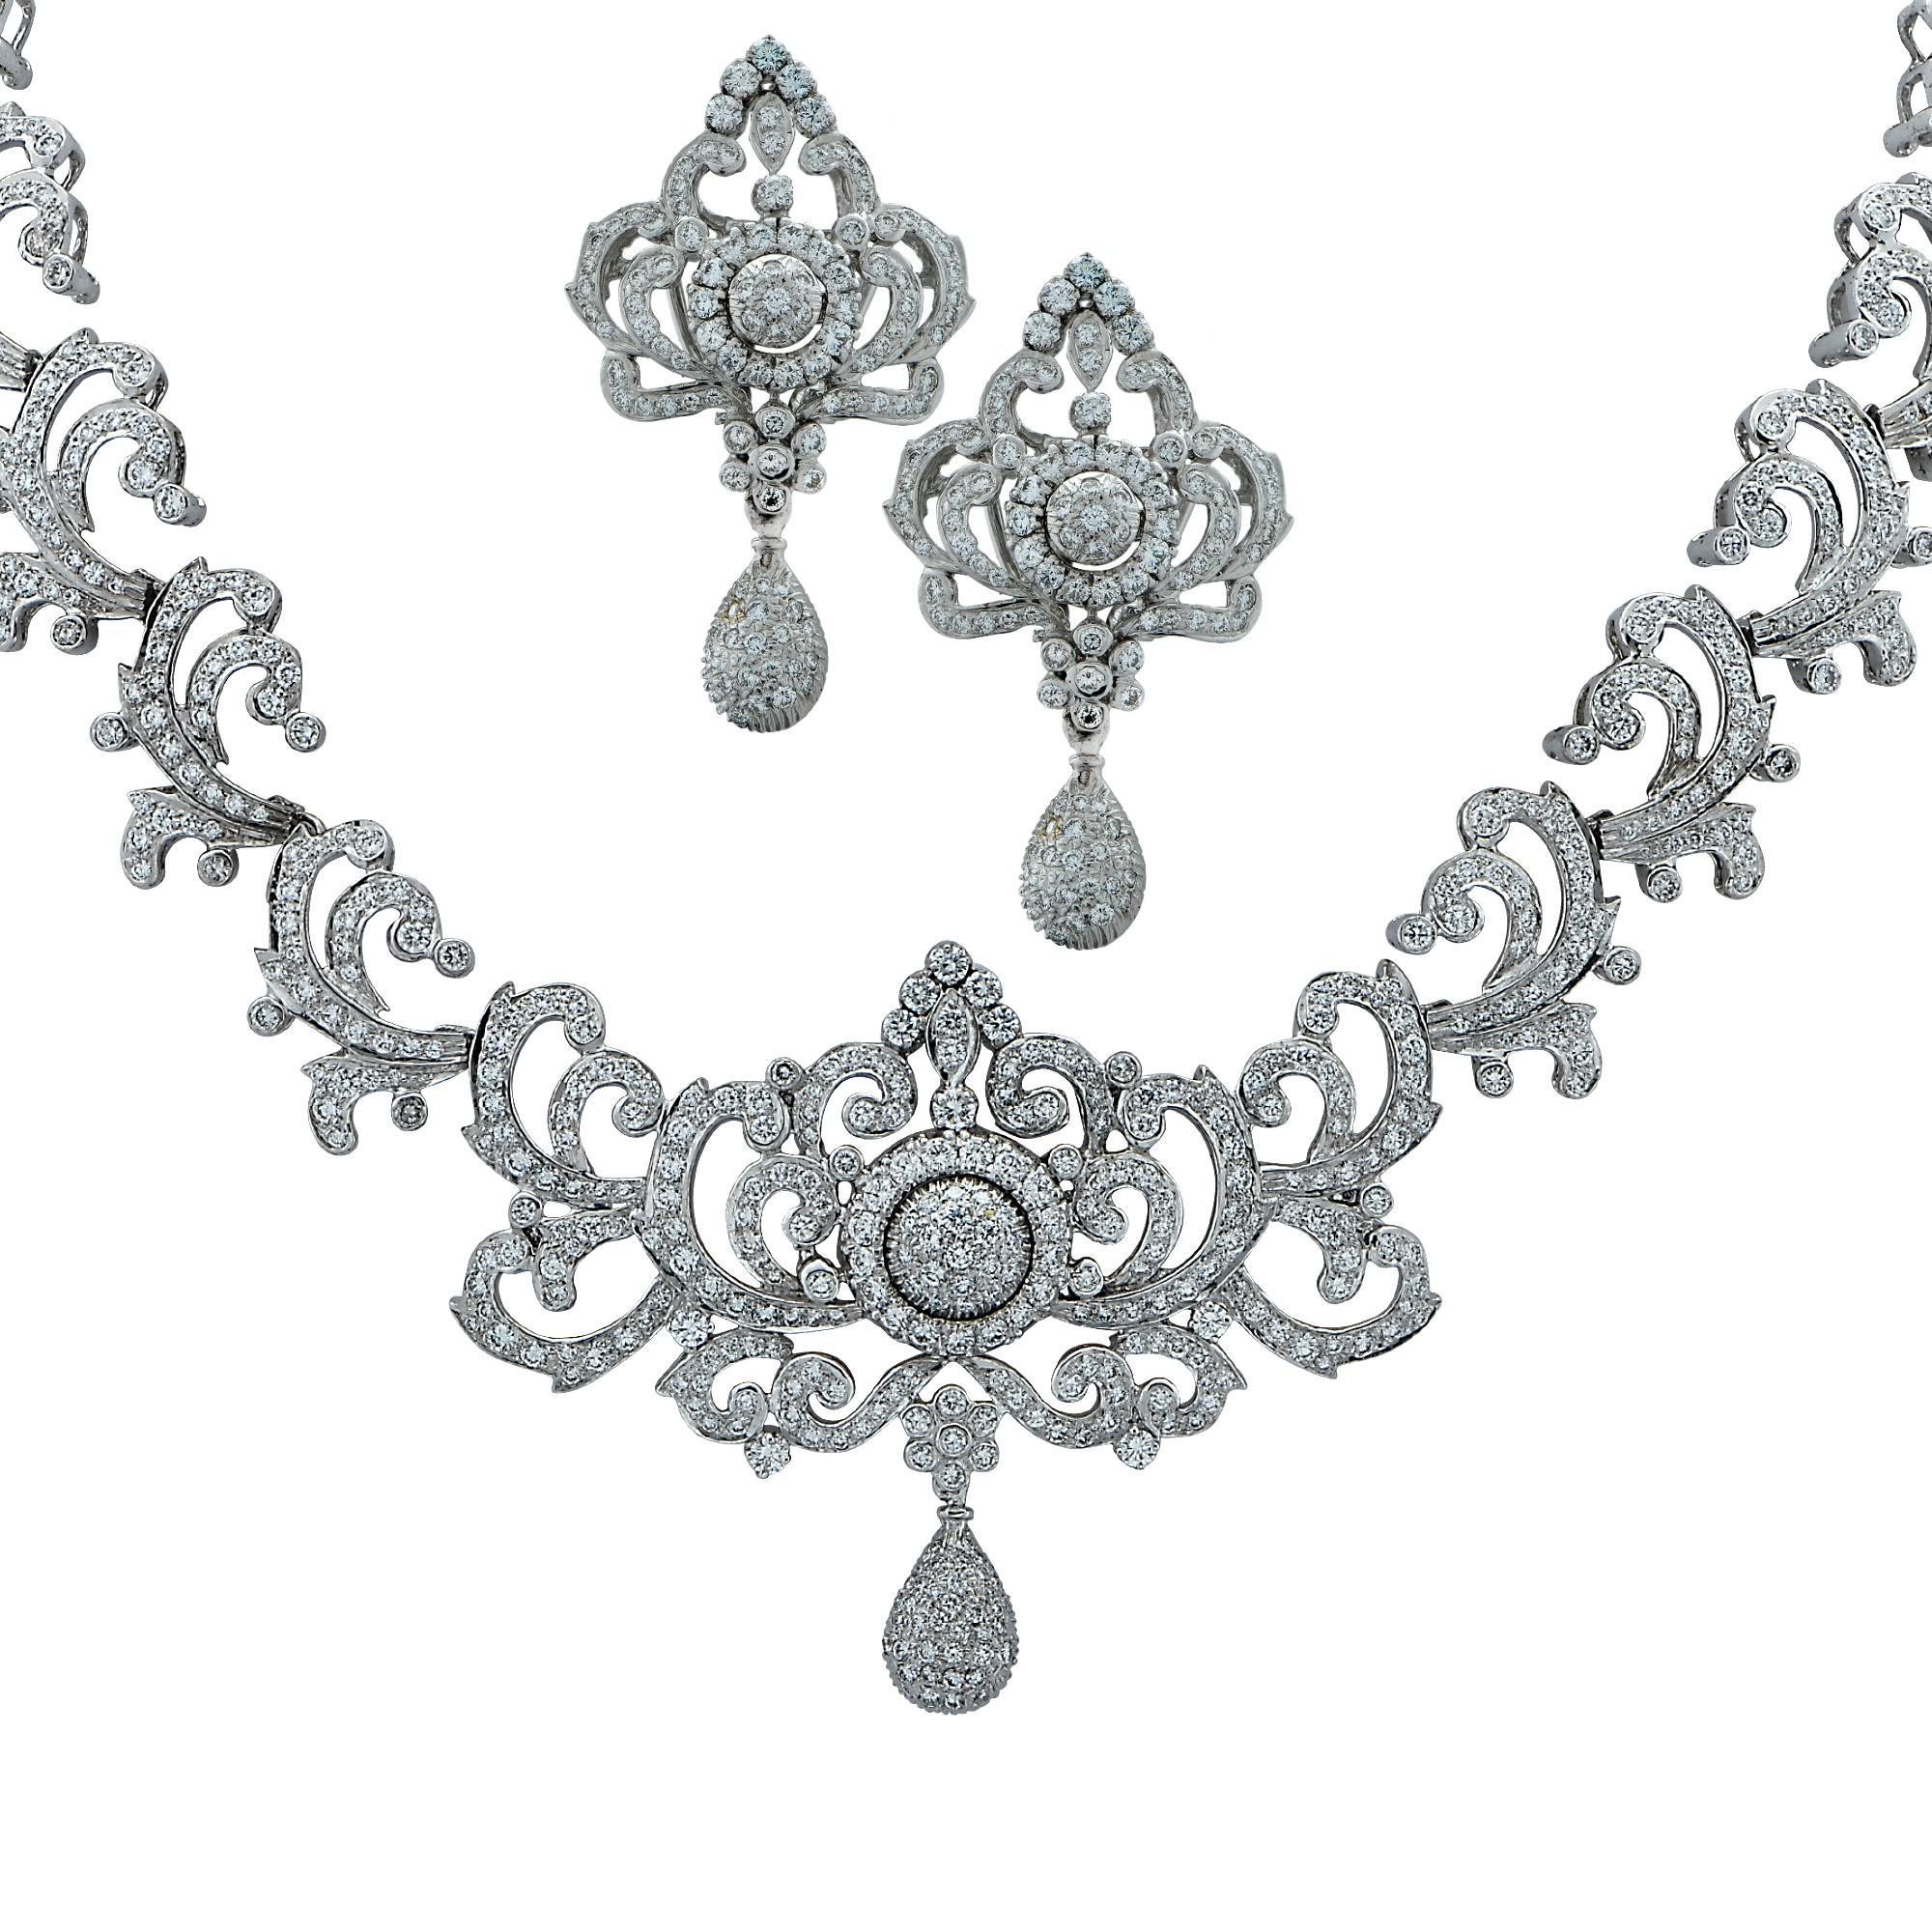 Ornate 10.83 Carat Diamond 18 Karat Gold Necklace and Earrings Set